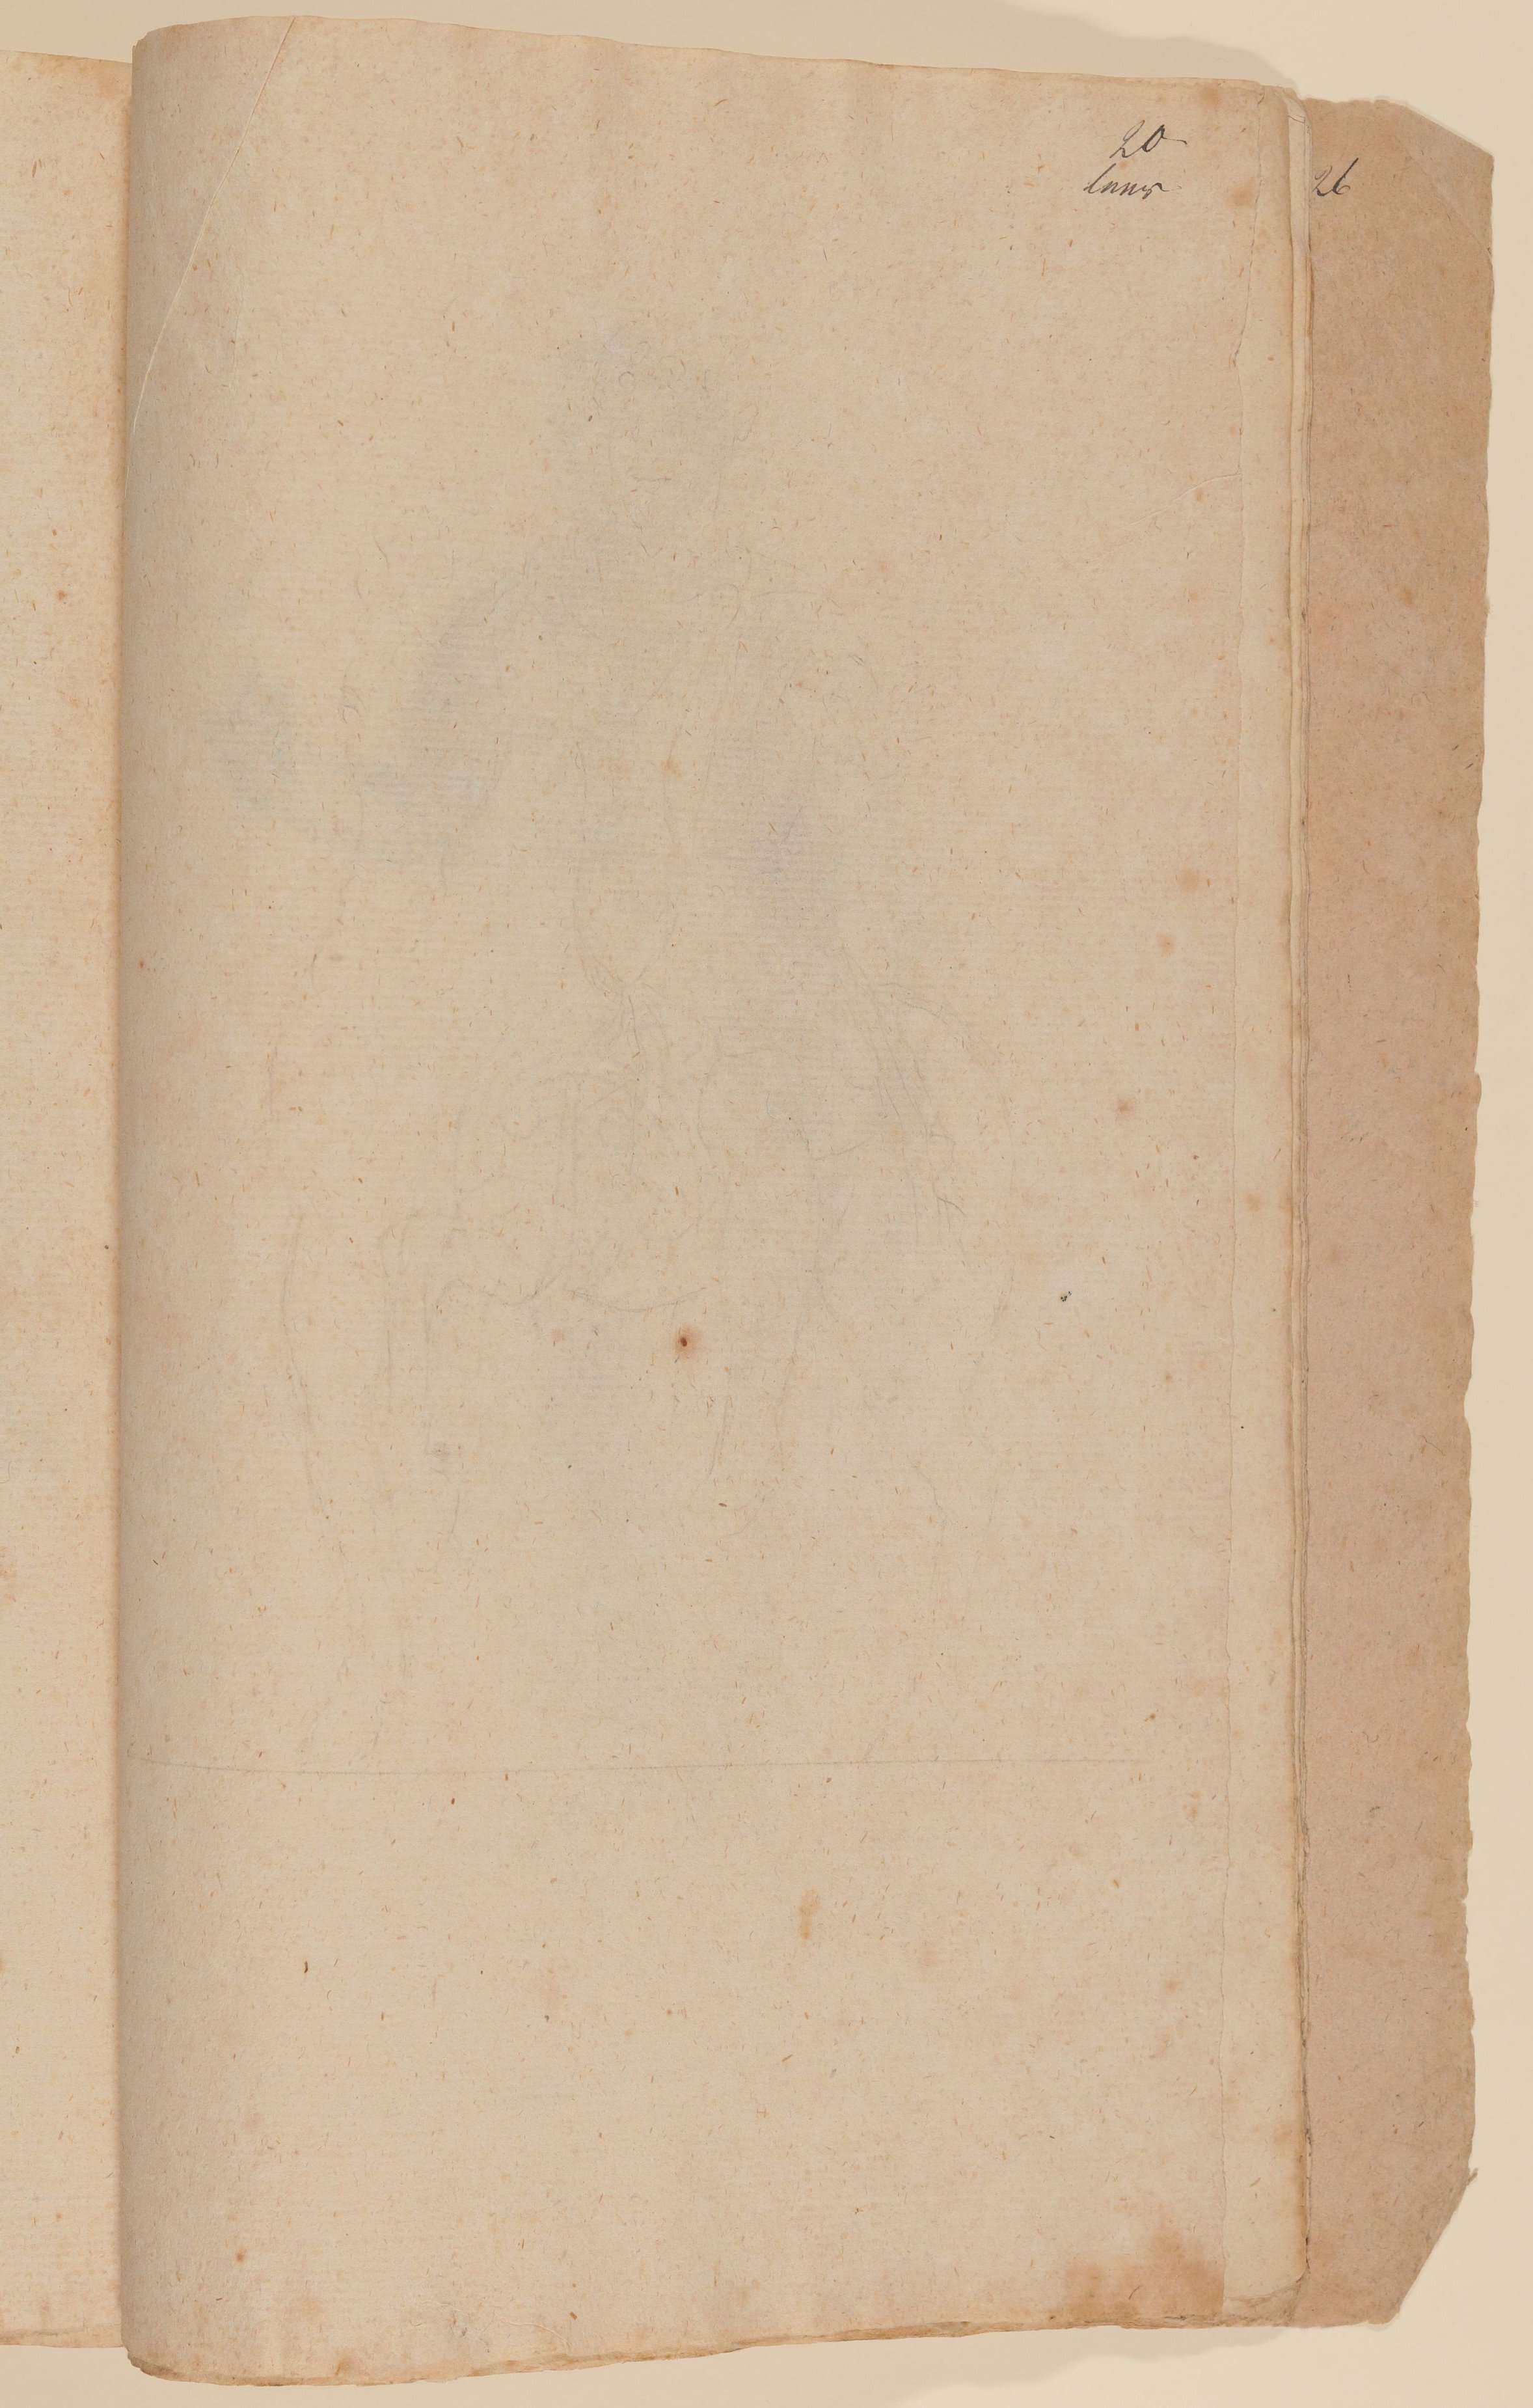 Marc Aurel [nach Tafel 11 von François Perriers "Icones et Segmenta Nobilium Signorum et Statuarum..." (1638)] (Freies Deutsches Hochstift CC BY-NC-SA)